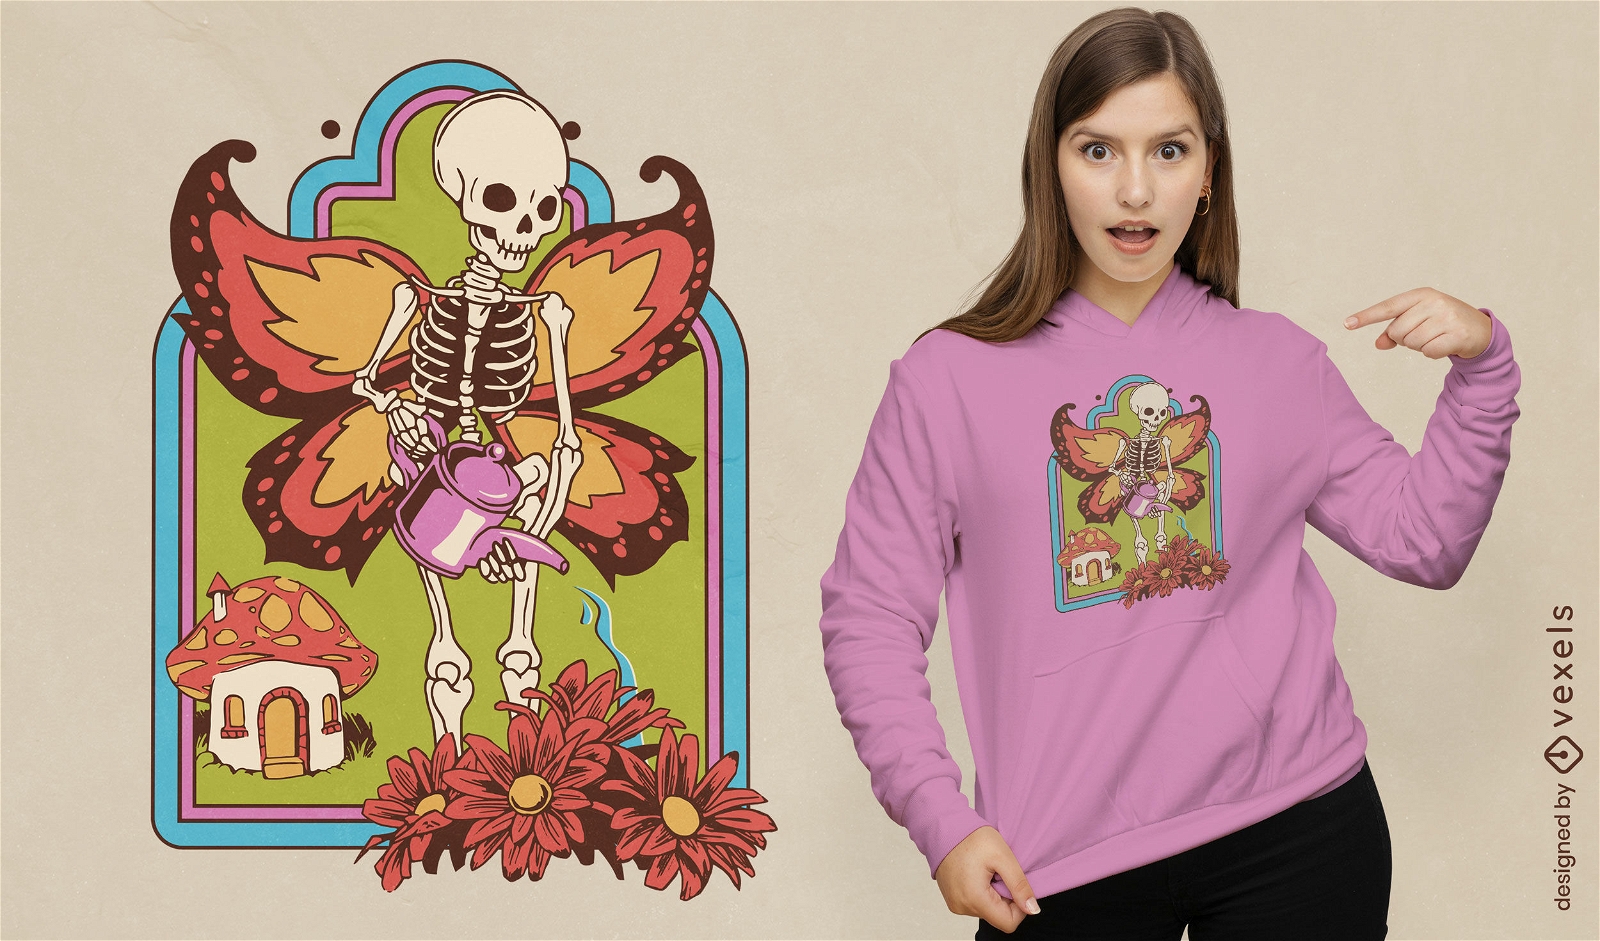 Dise?o de camiseta esqueleto y flores.